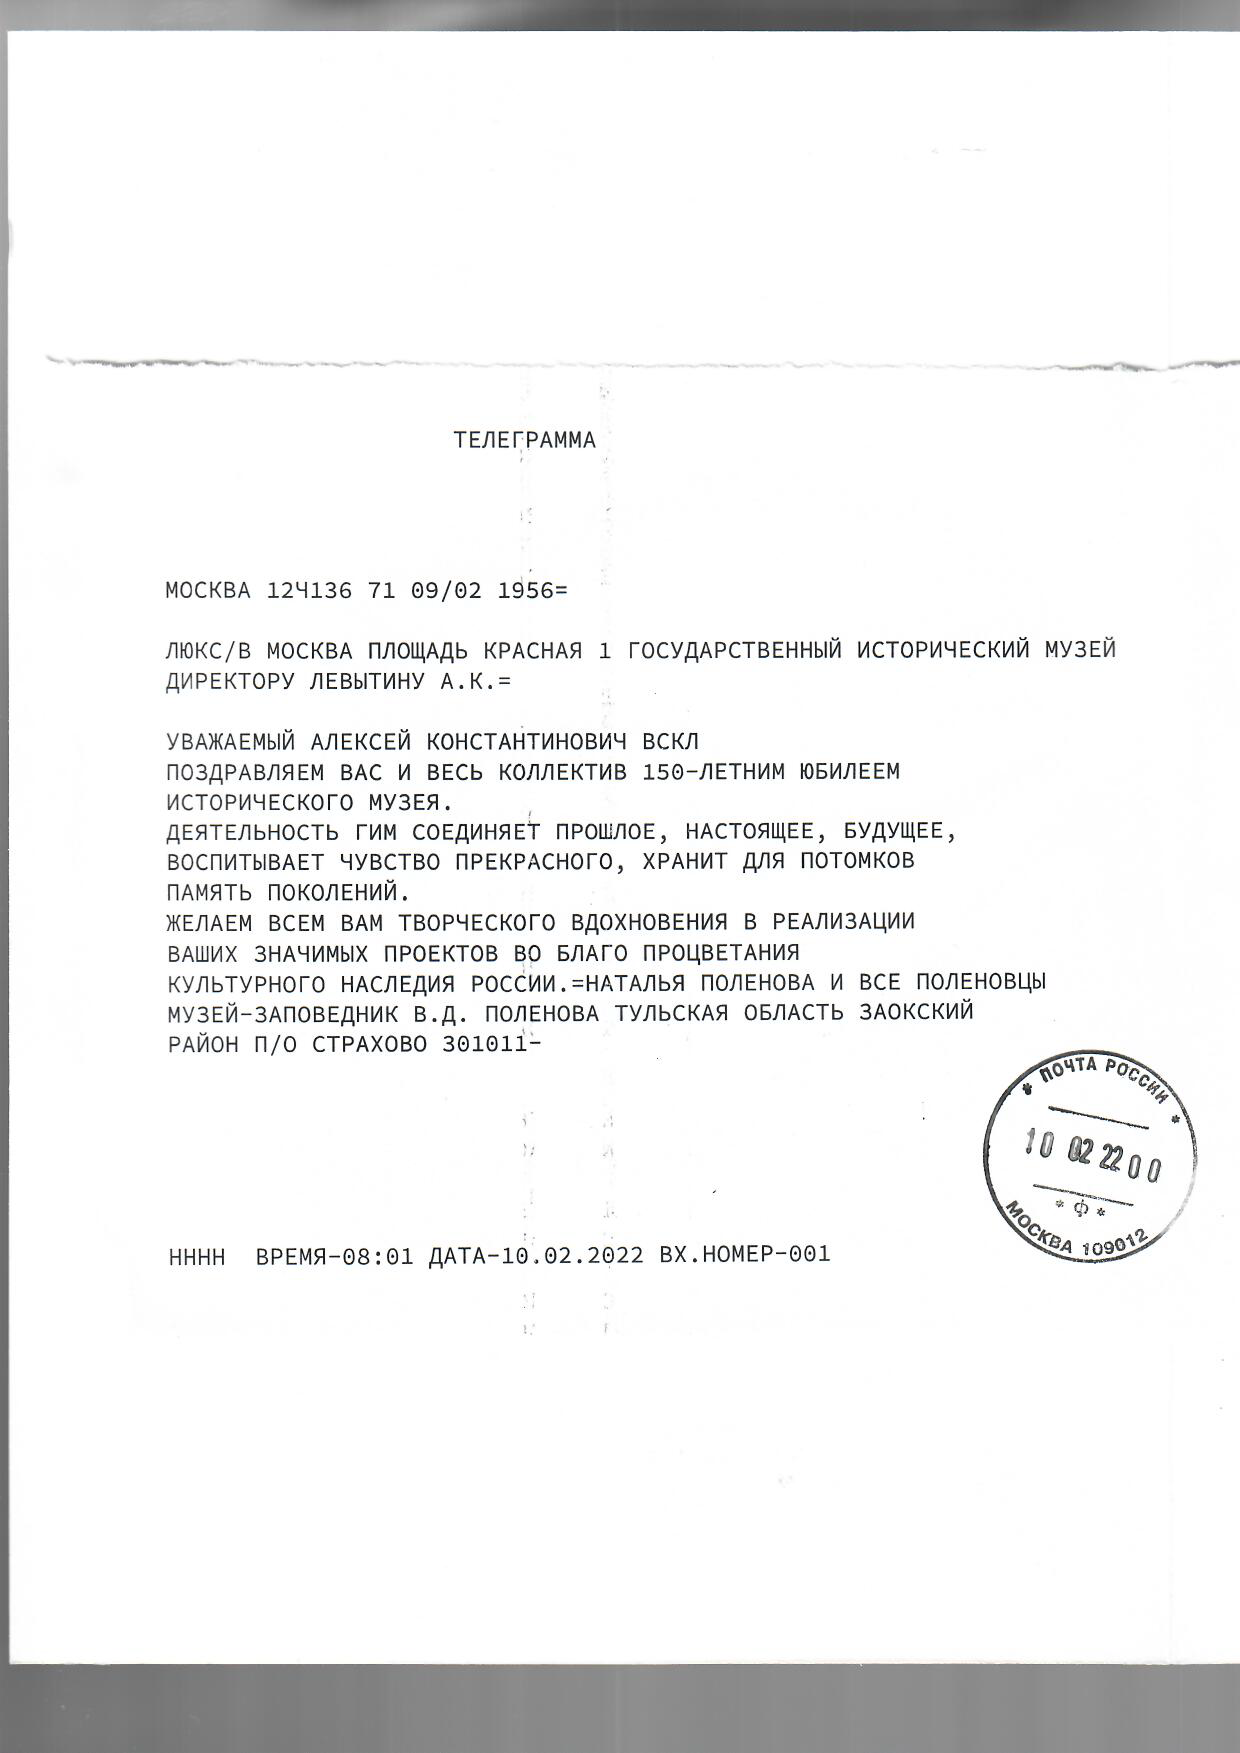 Телеграмма от директора музея-заповедника В. Д. Поленова Поленовой Н. Ф.